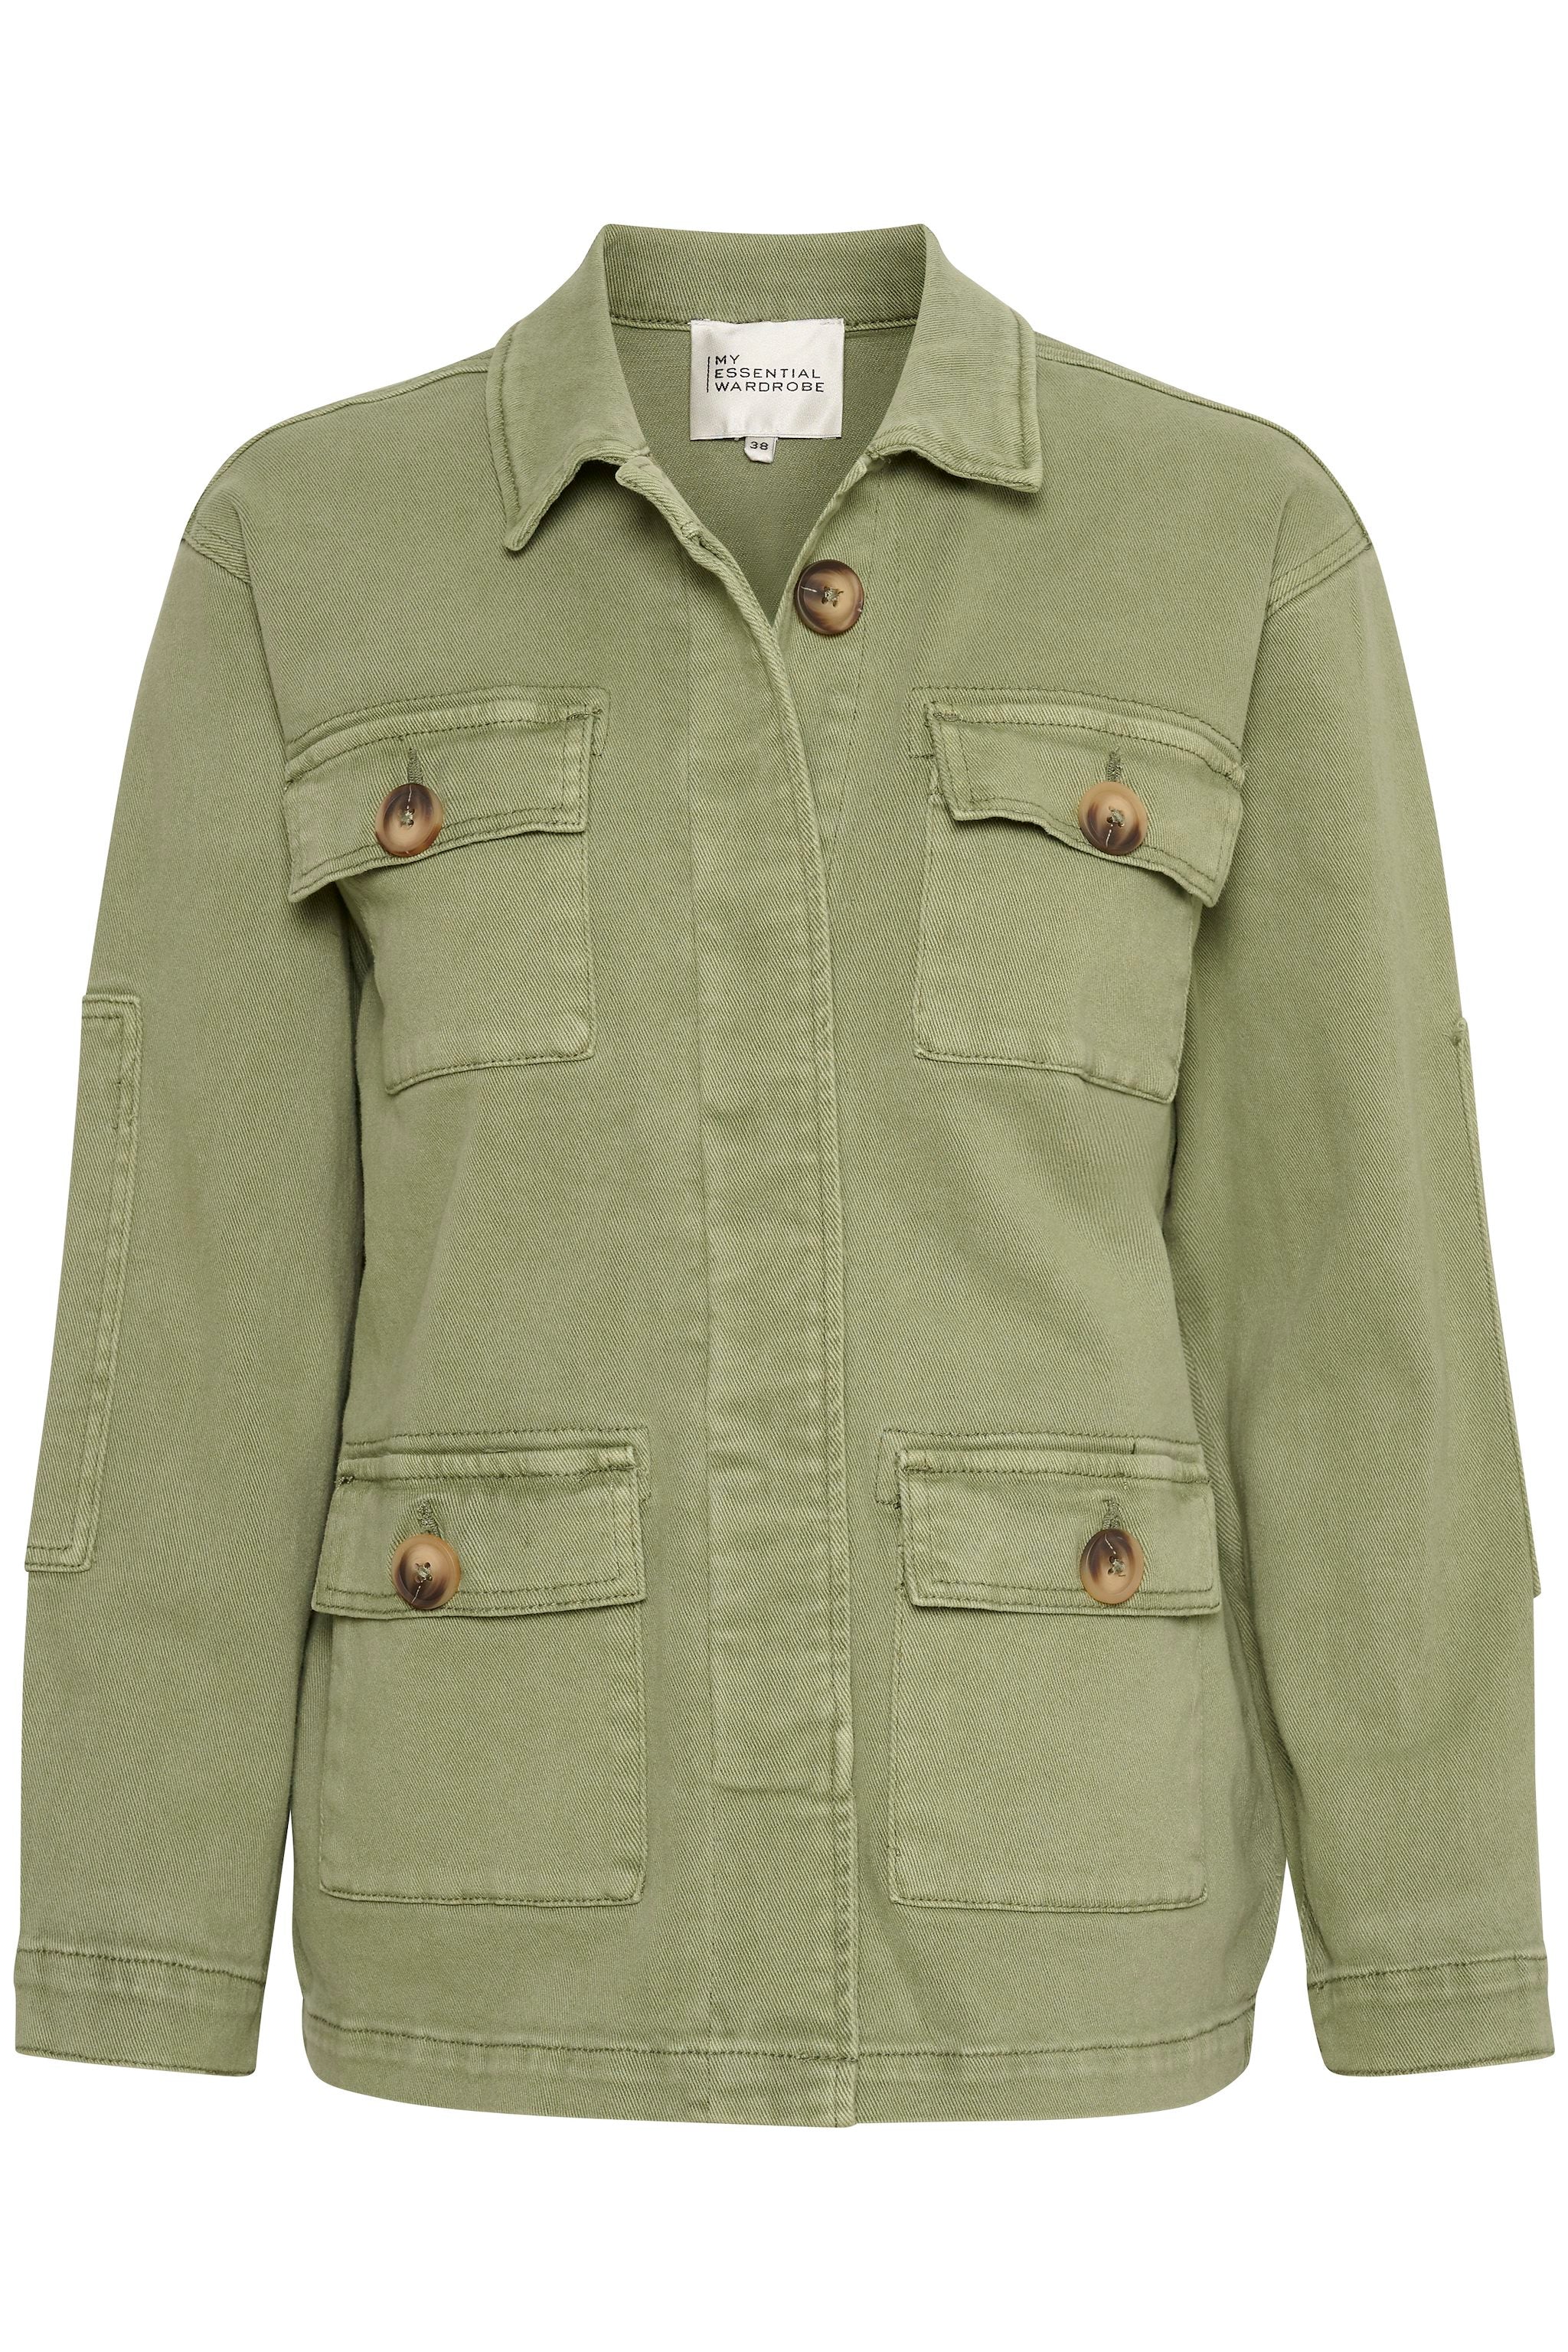 Army jakke fra My Essential Wardrobe